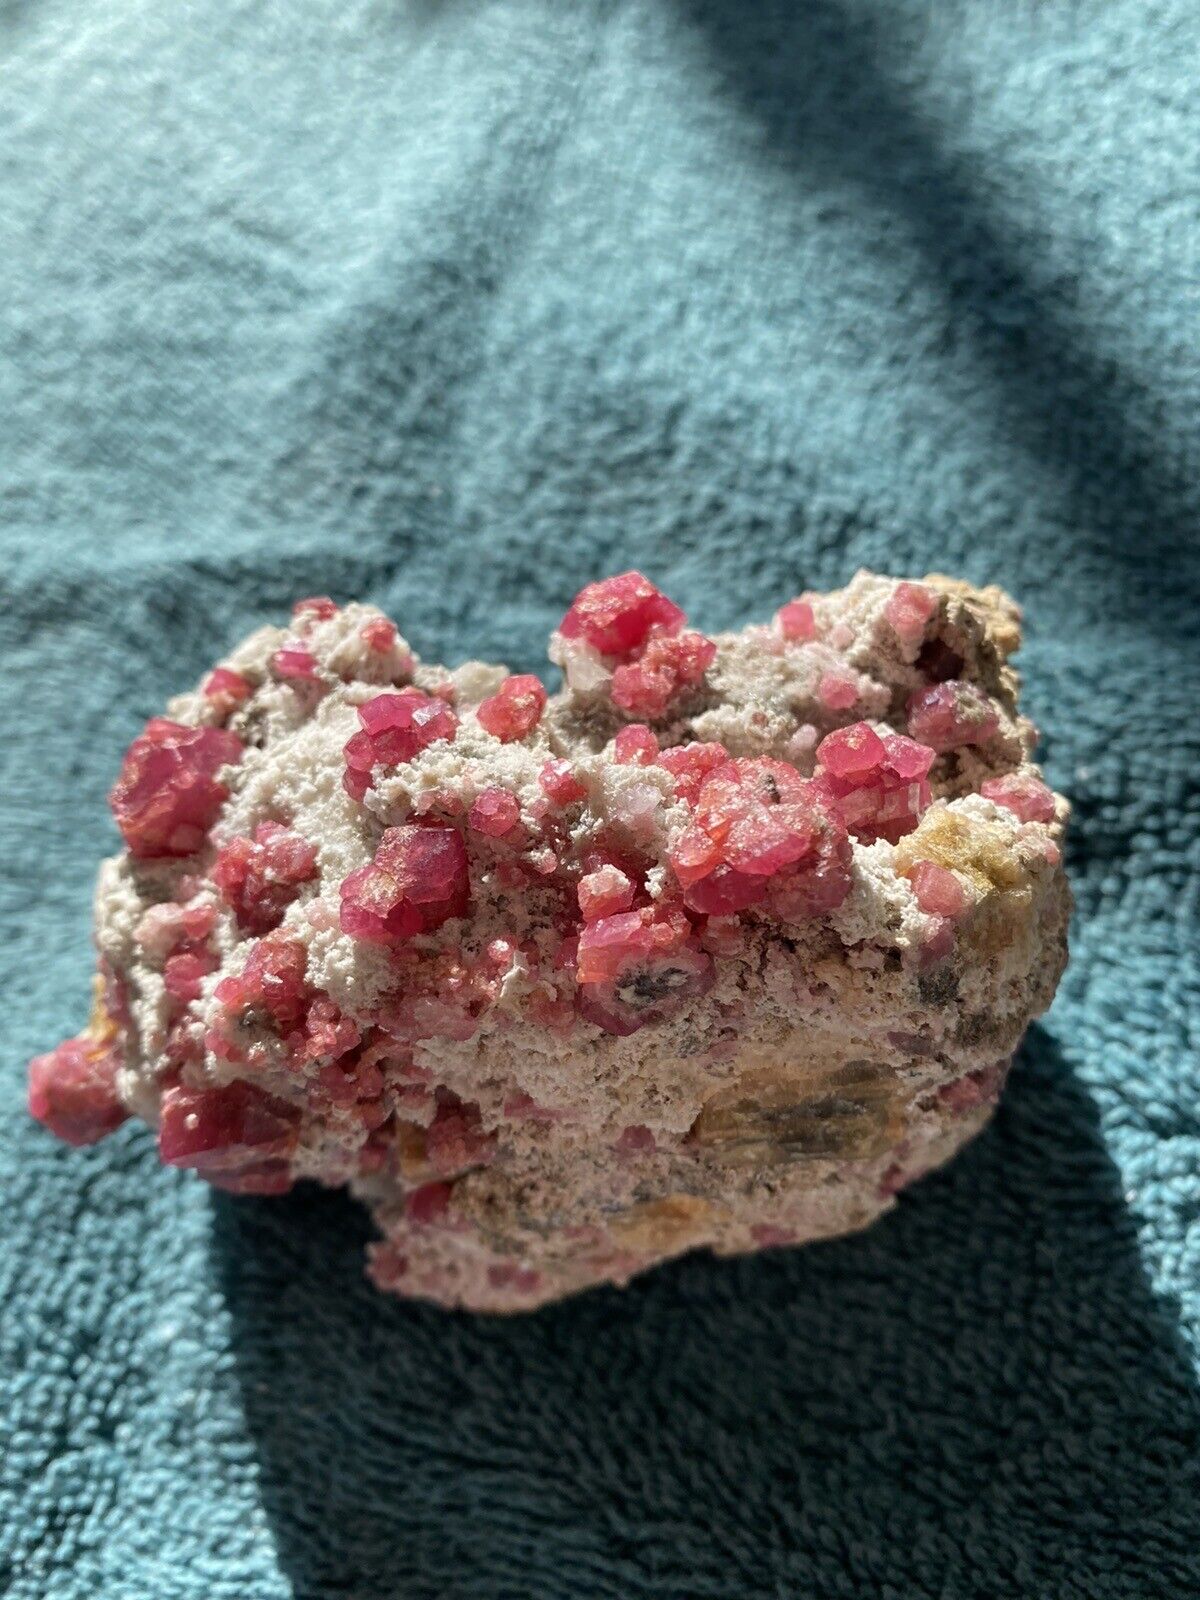 Red Grossular Garnet Crystal on White MTrix